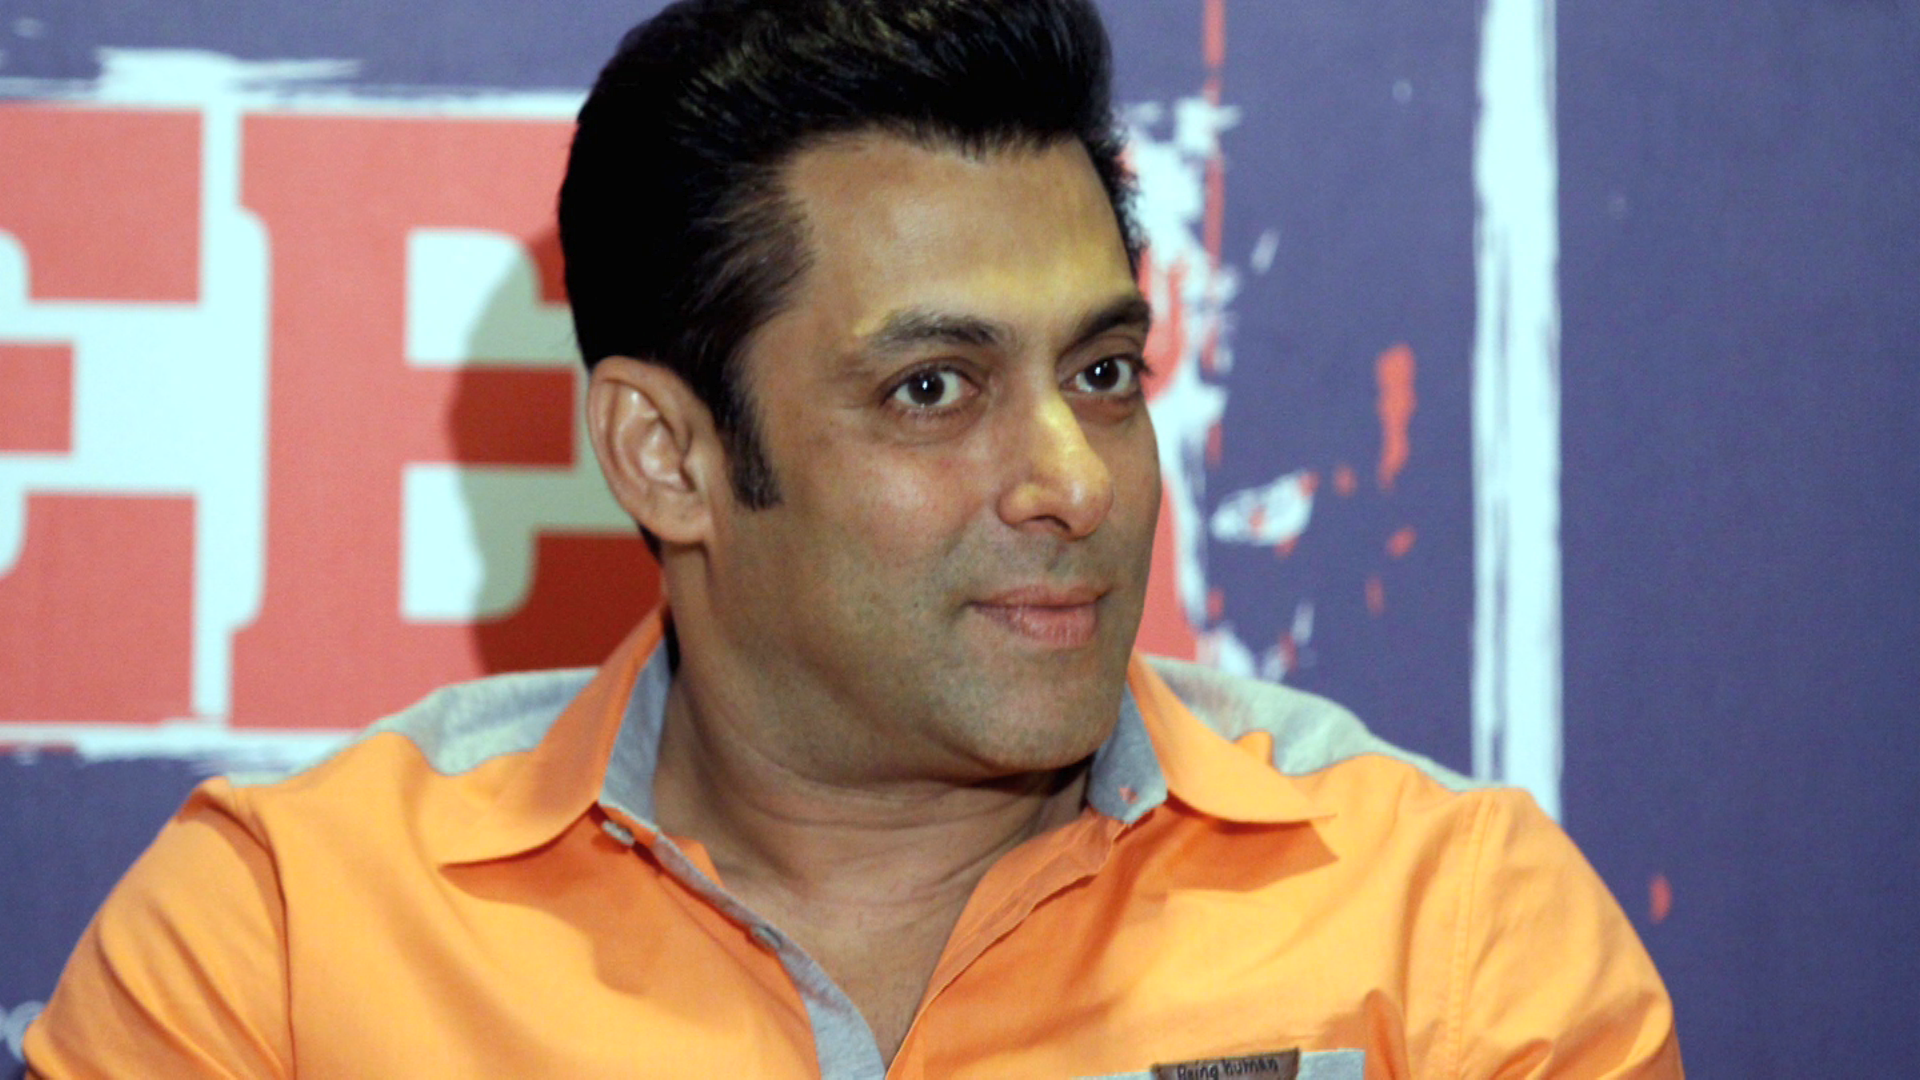 Salman Khan Hero Sex Video - Salman Khan's conviction in fatal hit-and-run tossed | CNN